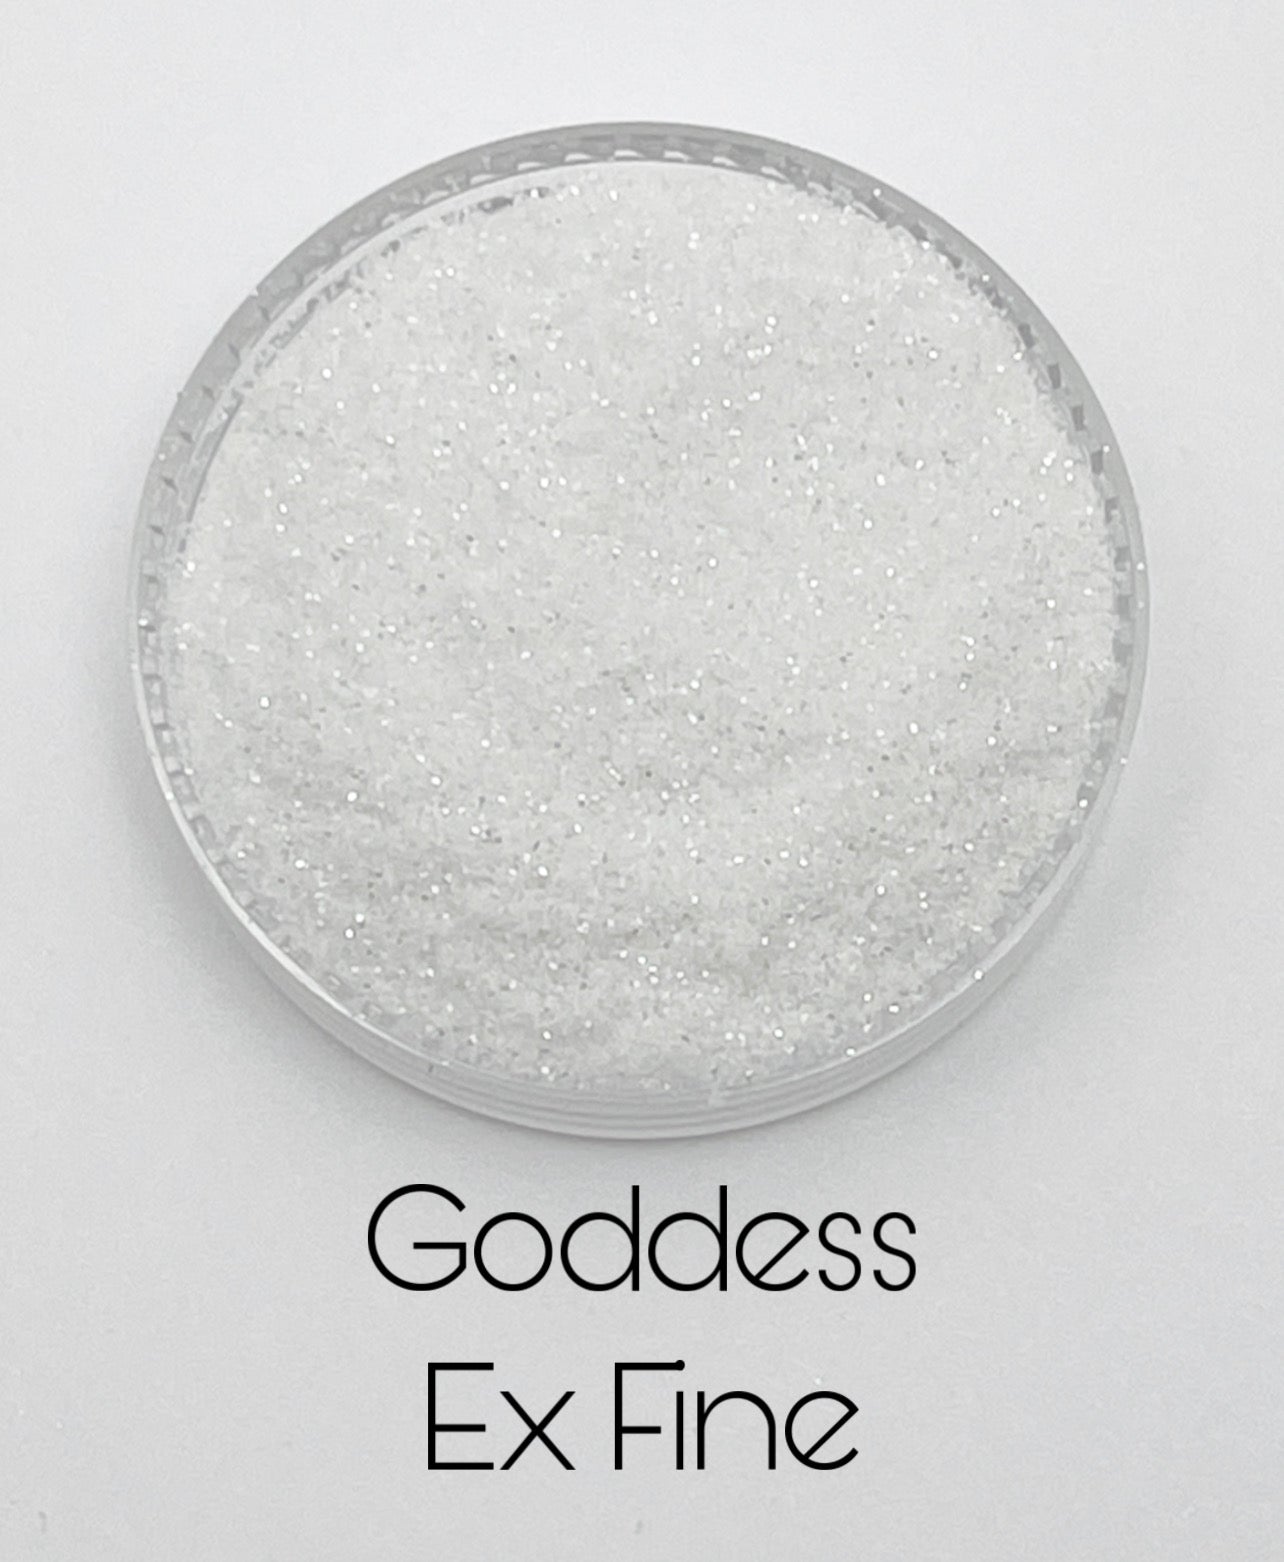 G1179 Goddess Extra Fine